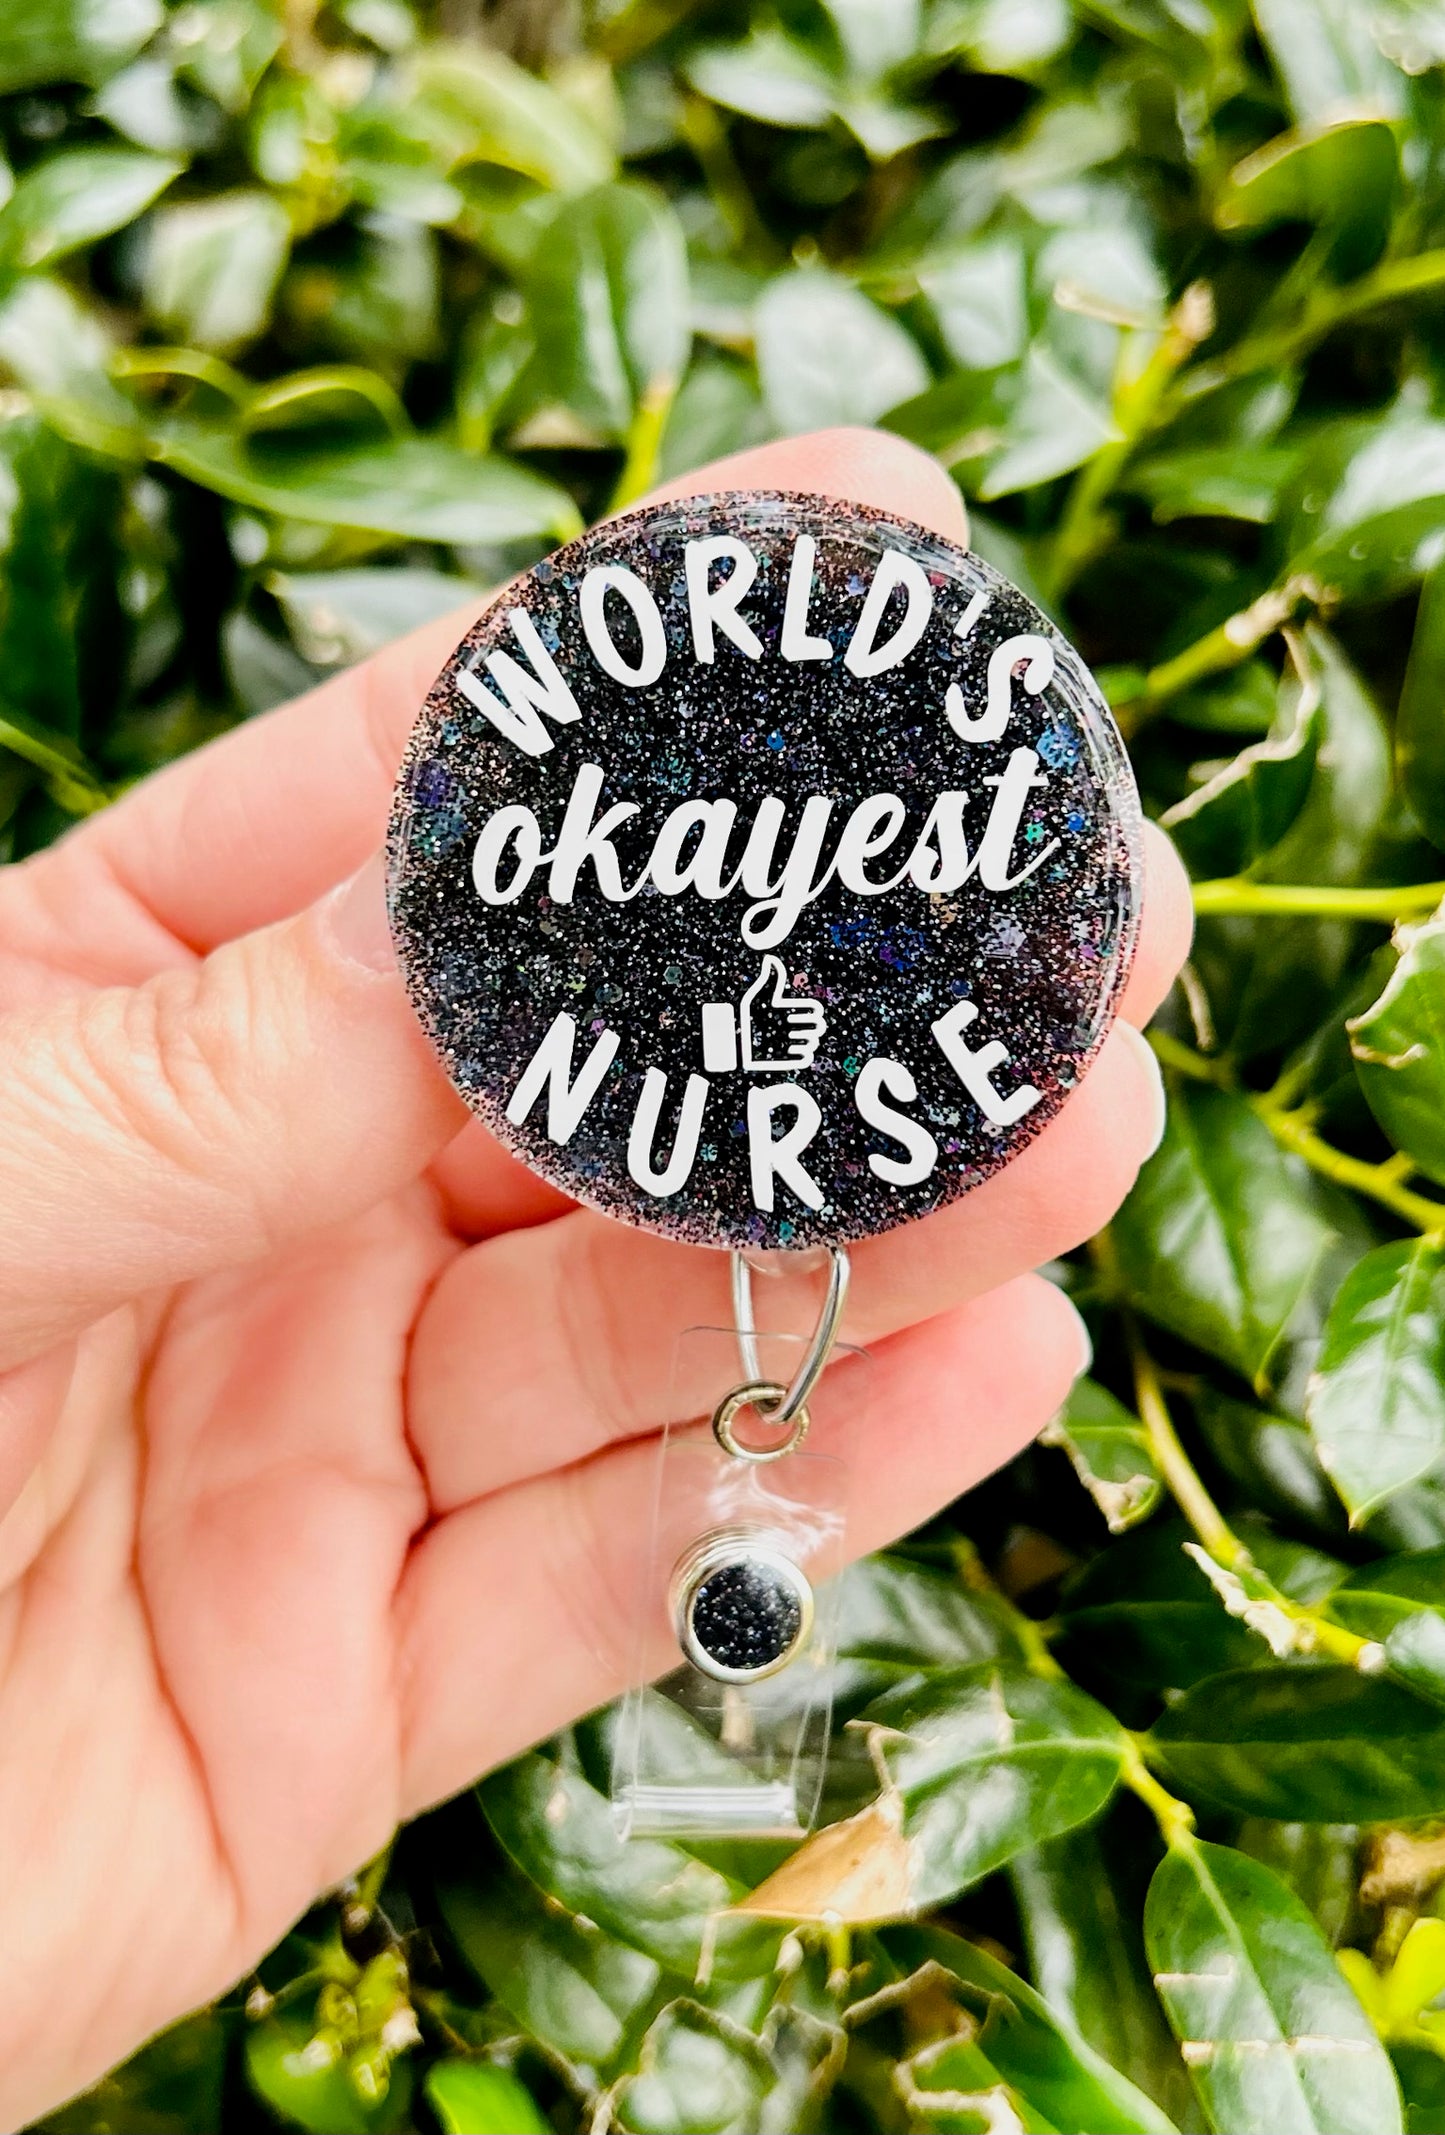 Worlds Okayest Nurse Badge Reel